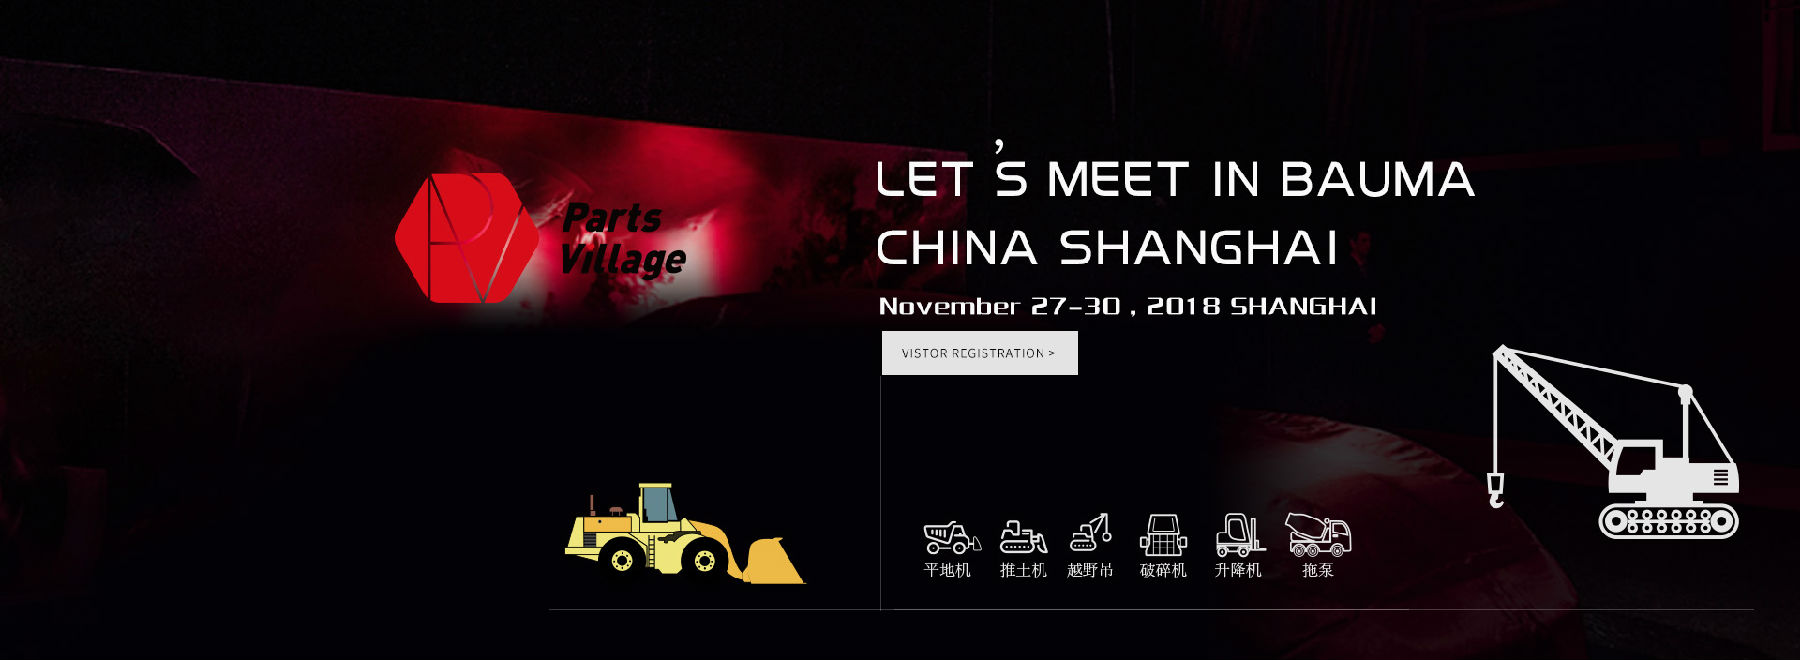 Welcome to visit us in BAUMA CHINA SHANGHAI ON NOVEMBER 27-30,2018